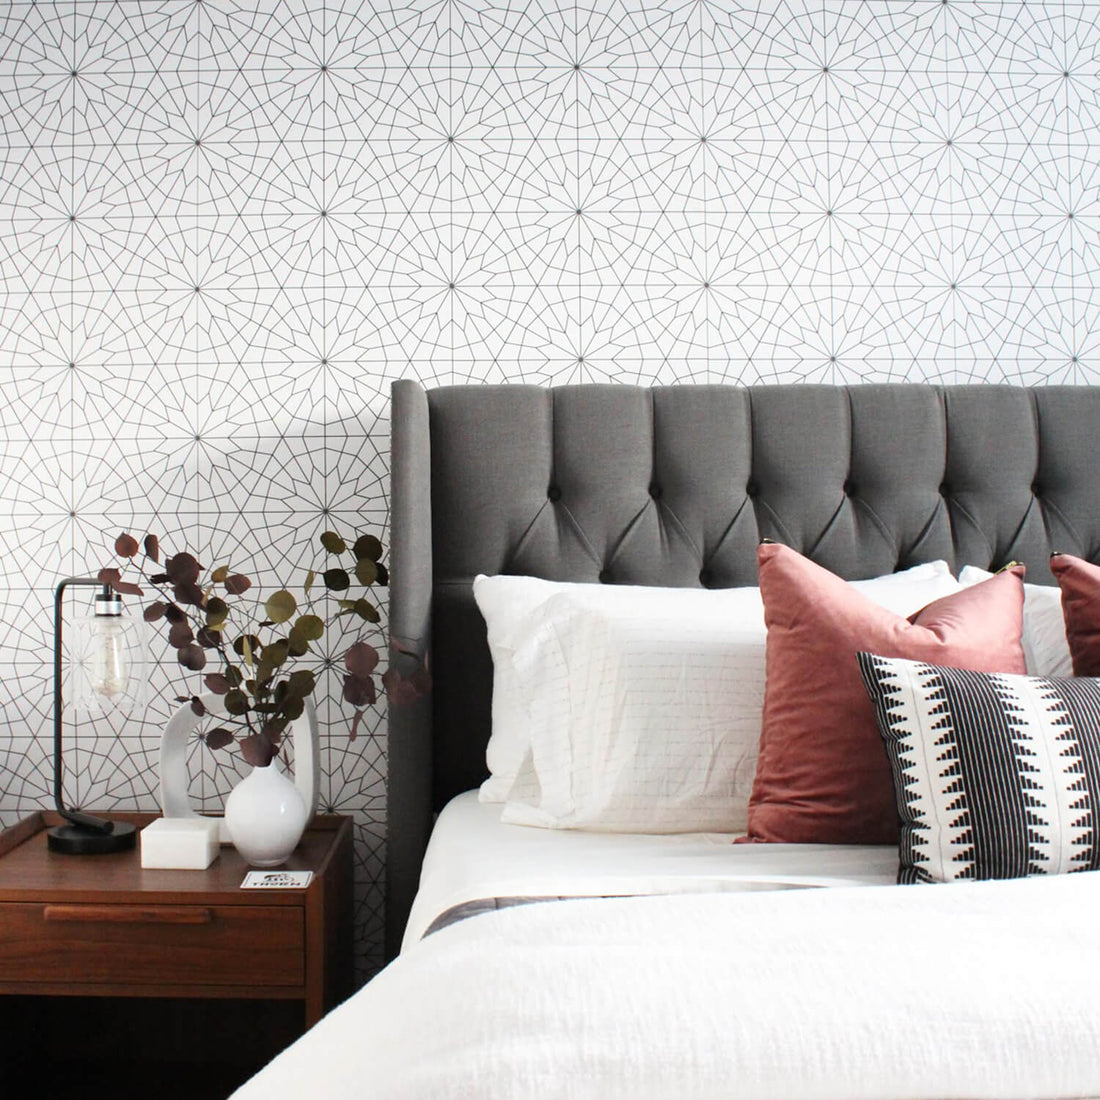 Bedroom Wallpaper : 6 Creative Ideas for a Modern Bedroom wall